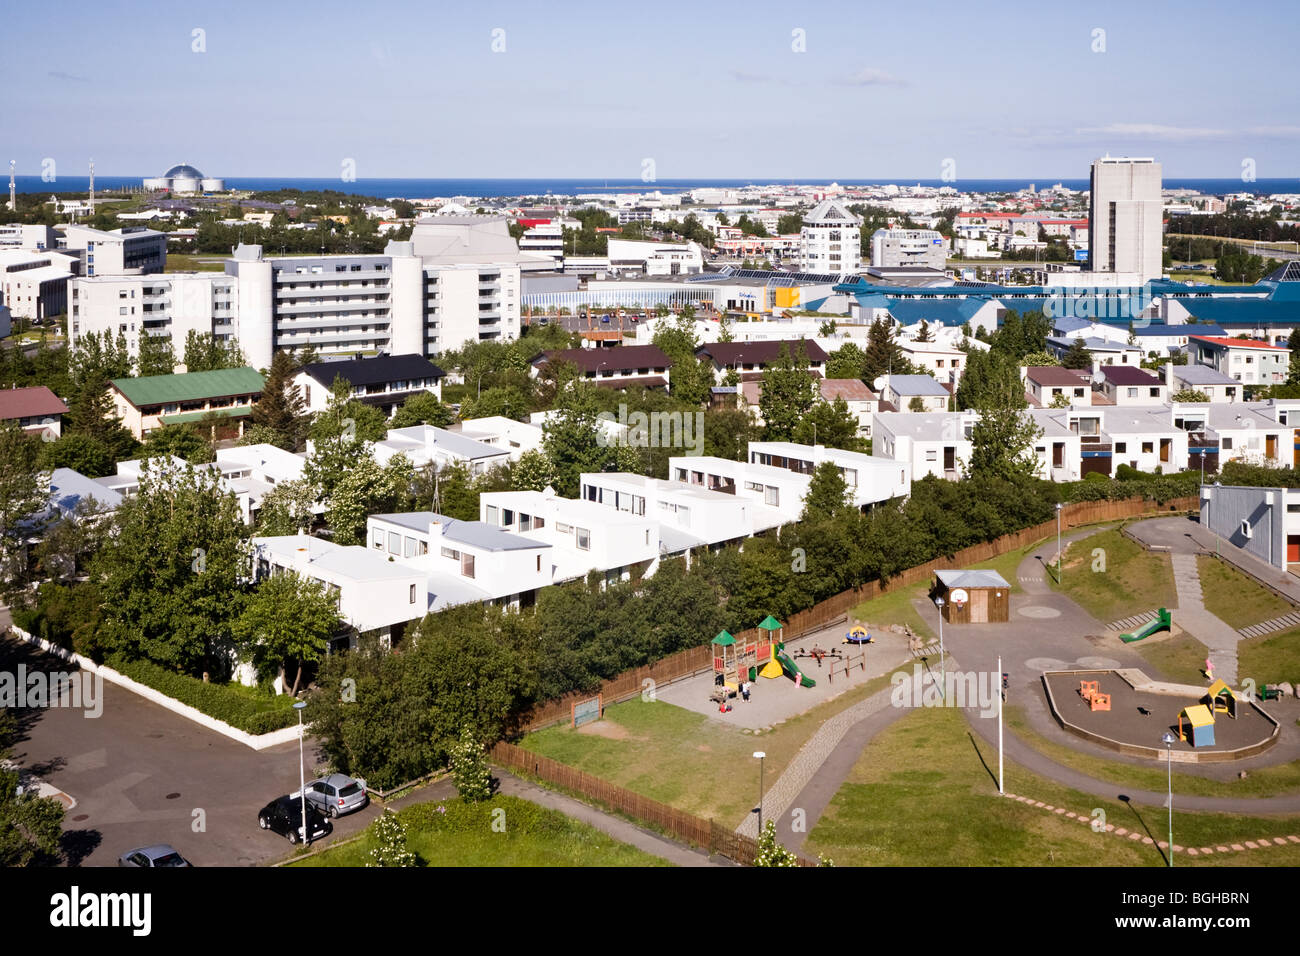 Overview of Reykjavik, Iceland. Perlan restaurant (top left). Stock Photo